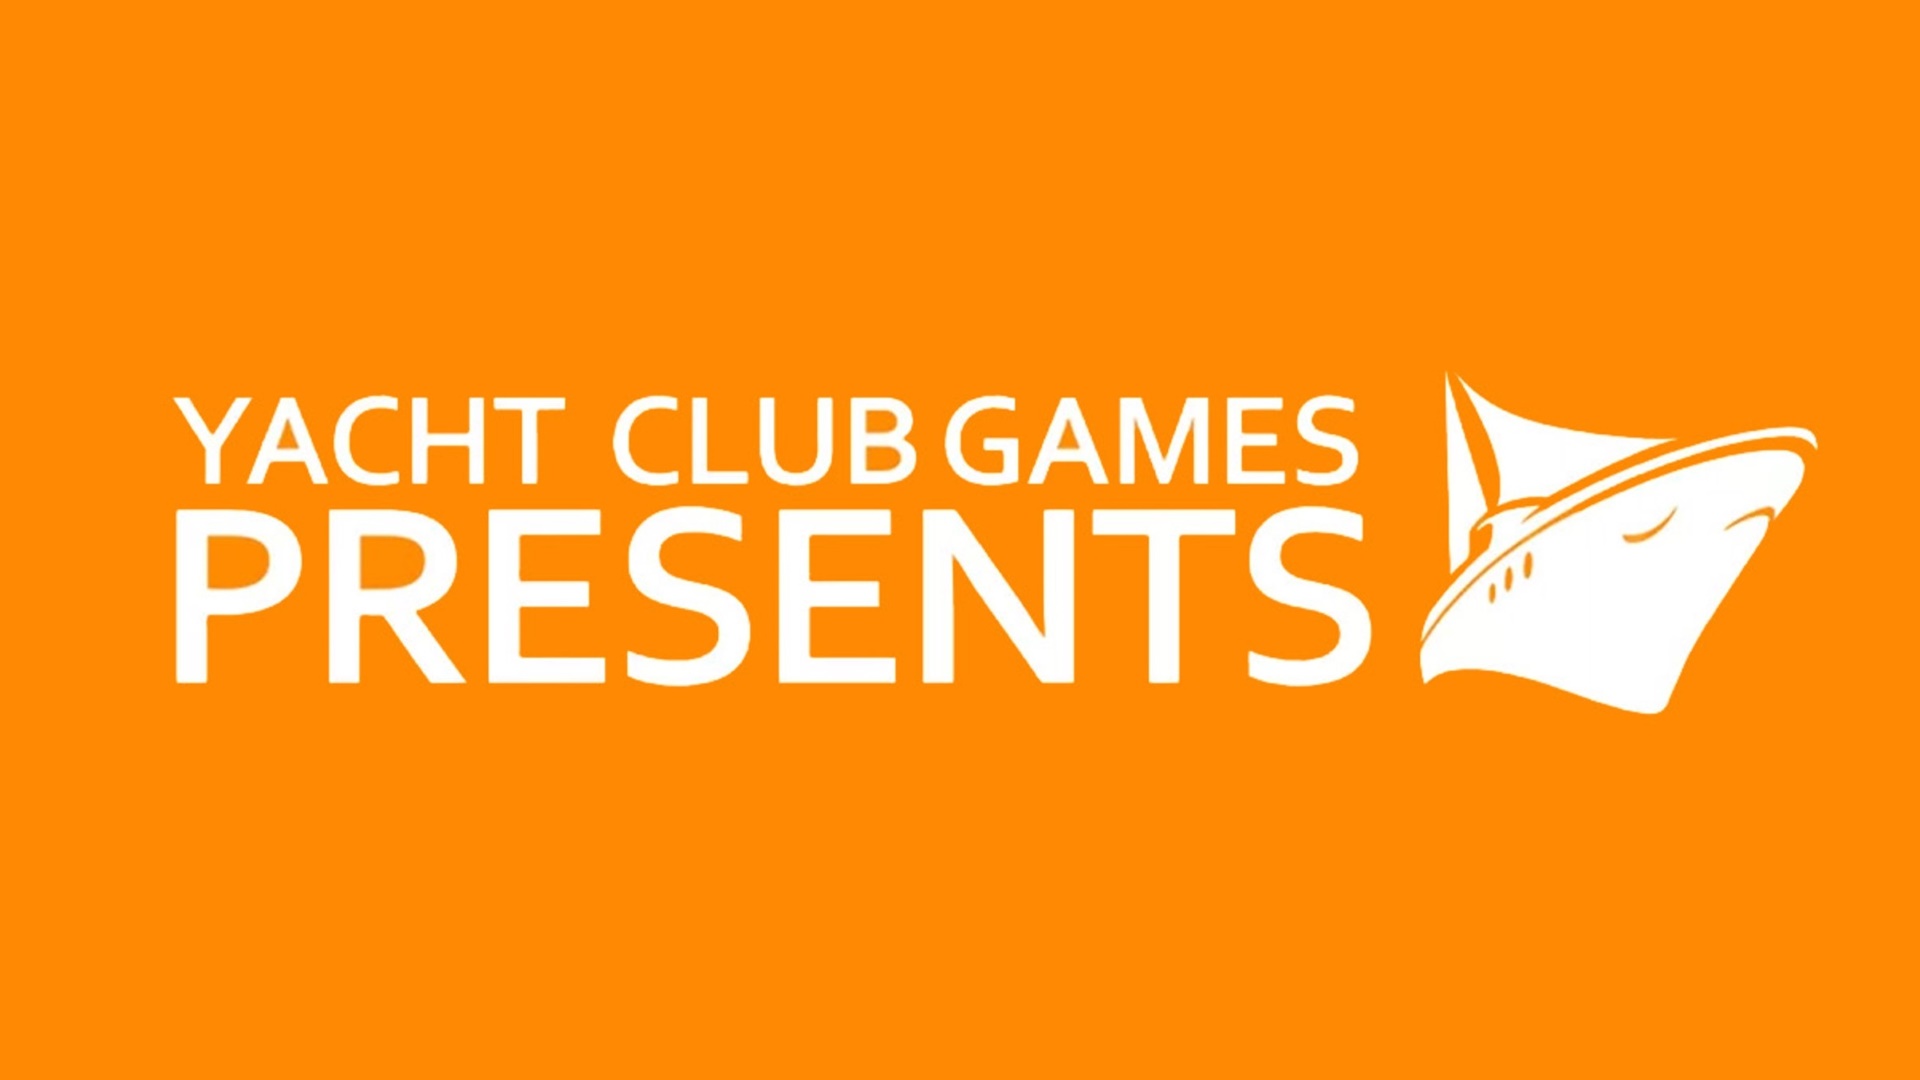 Yacht Club Games представляет прямую трансляцию, анонсированную на 14 июня